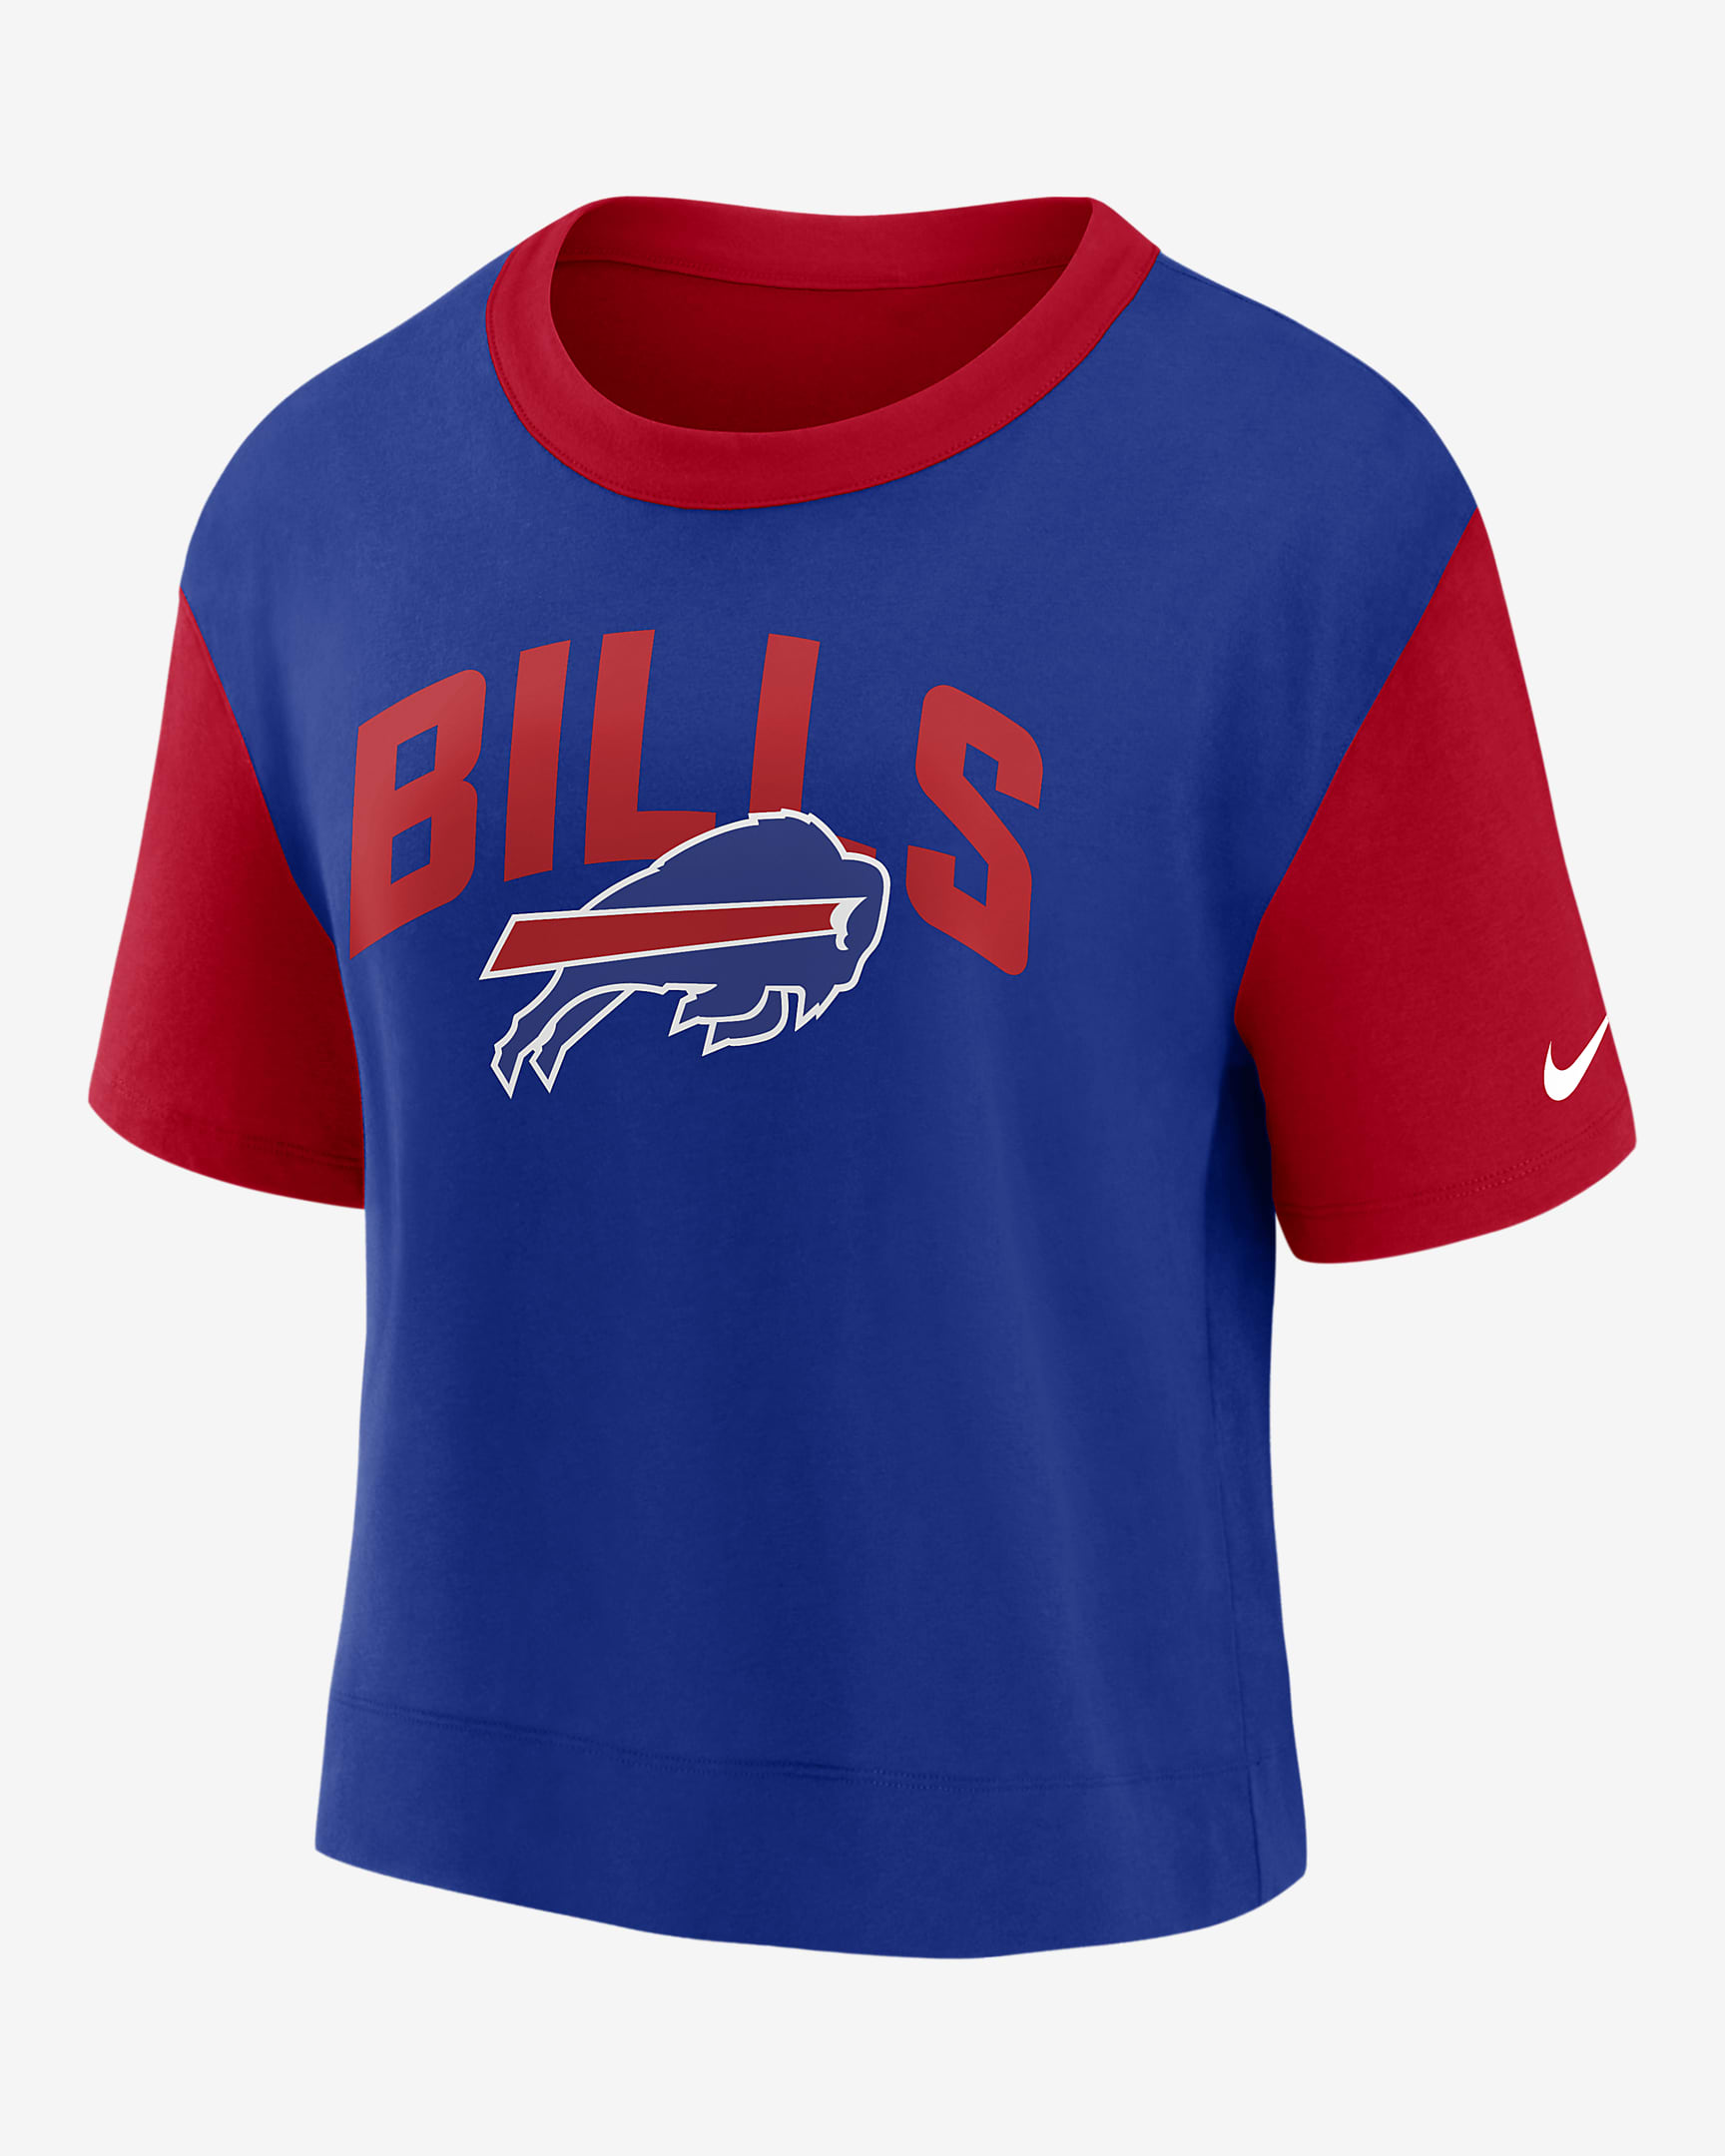 Nike Fashion (NFL Buffalo Bills) Women's HighHip TShirt.